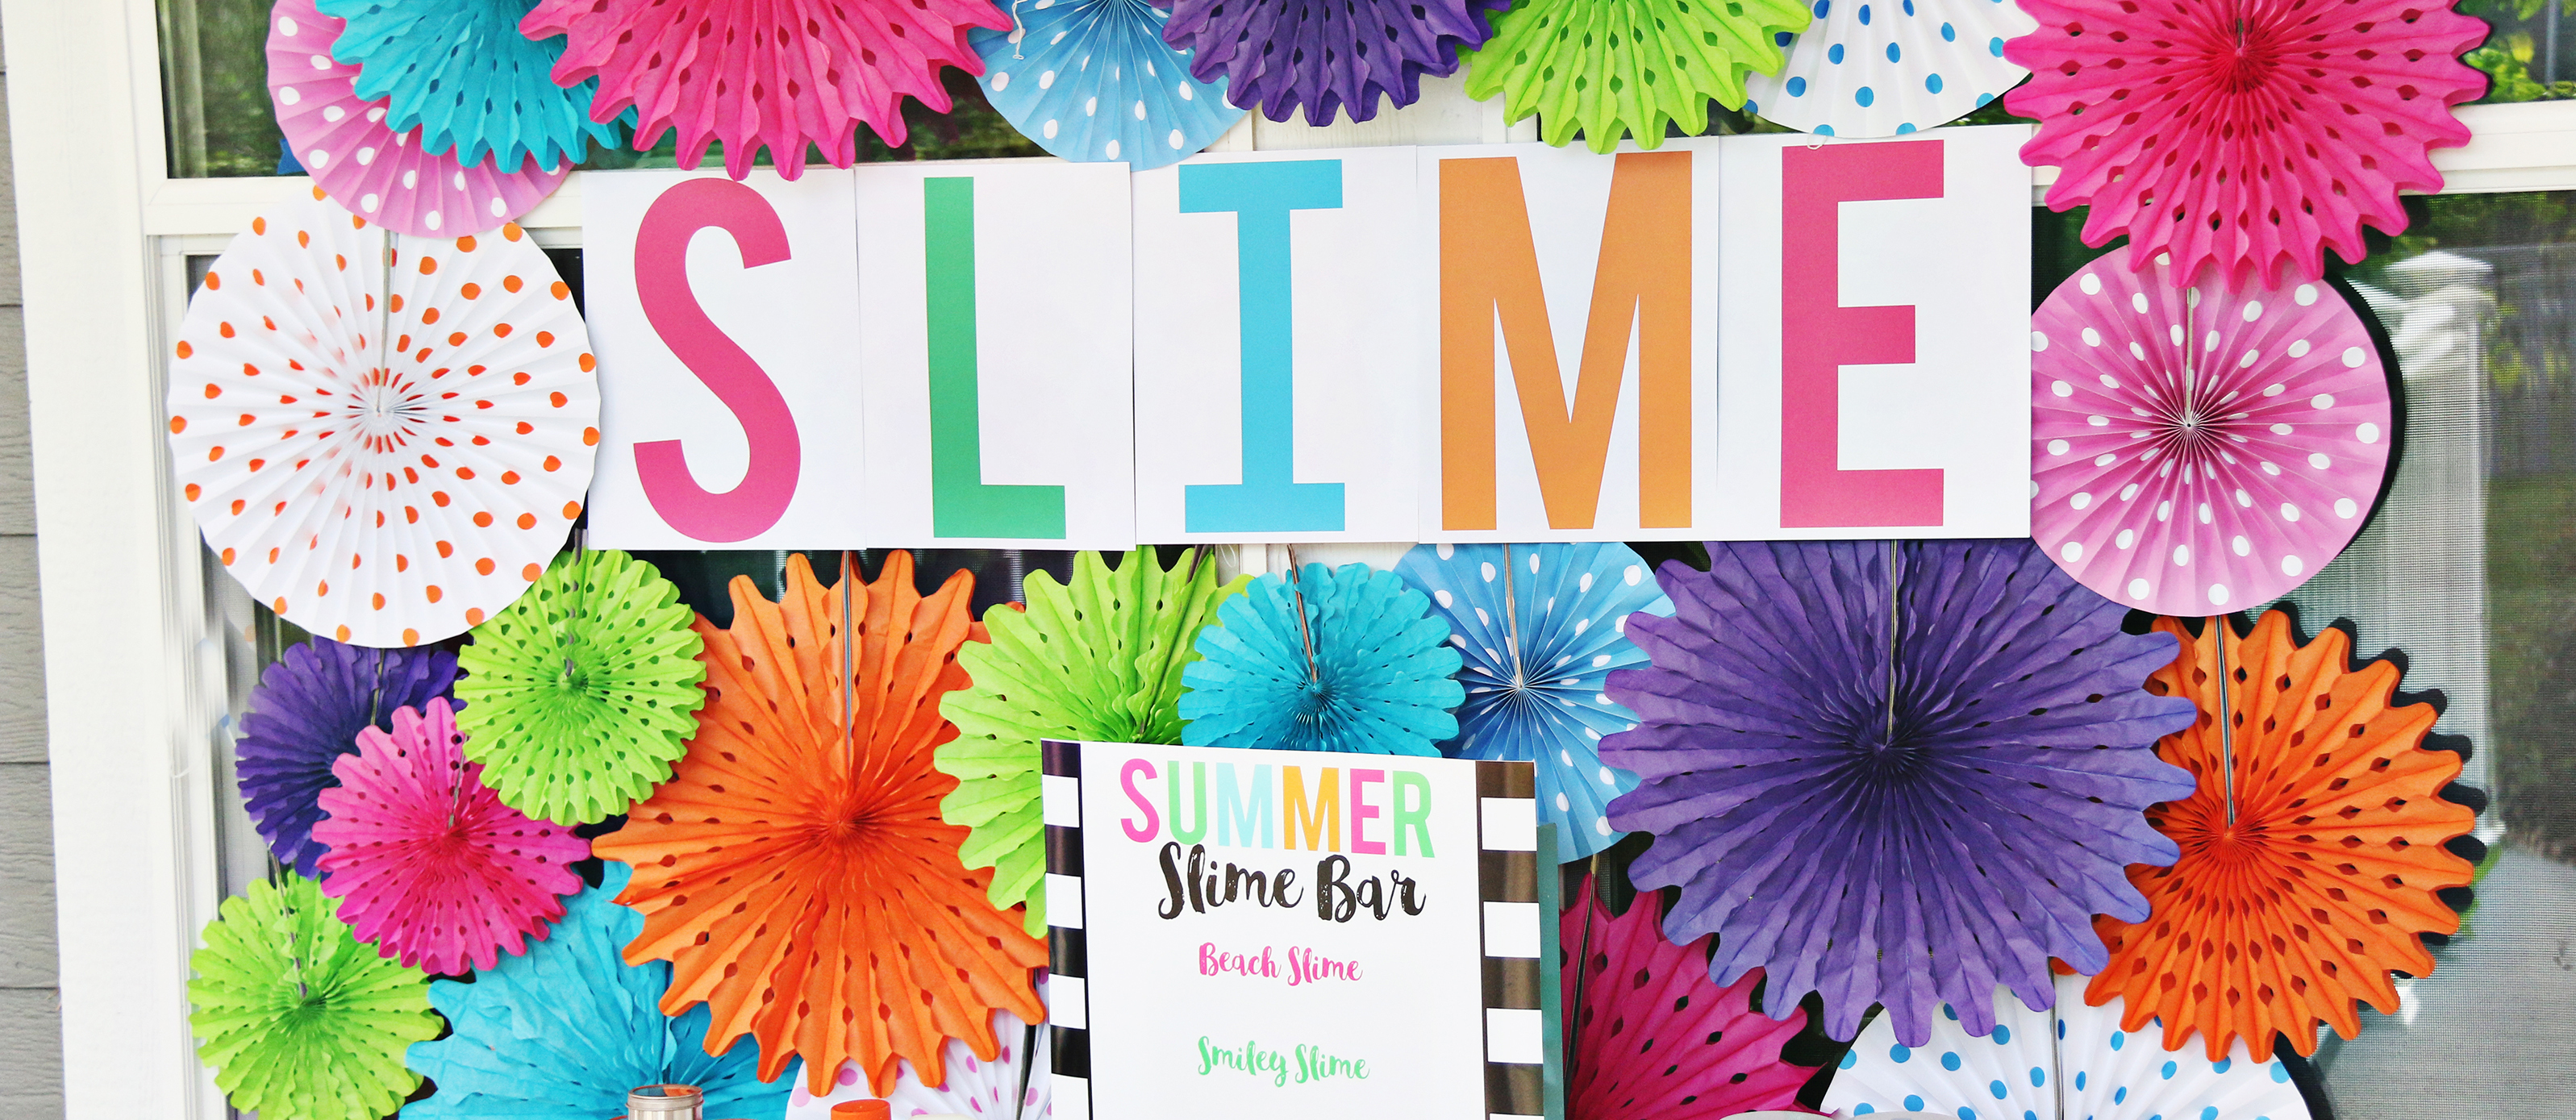 Elmer's 9-piece All Star Slime Kit $14.99 (Retail $29.99)